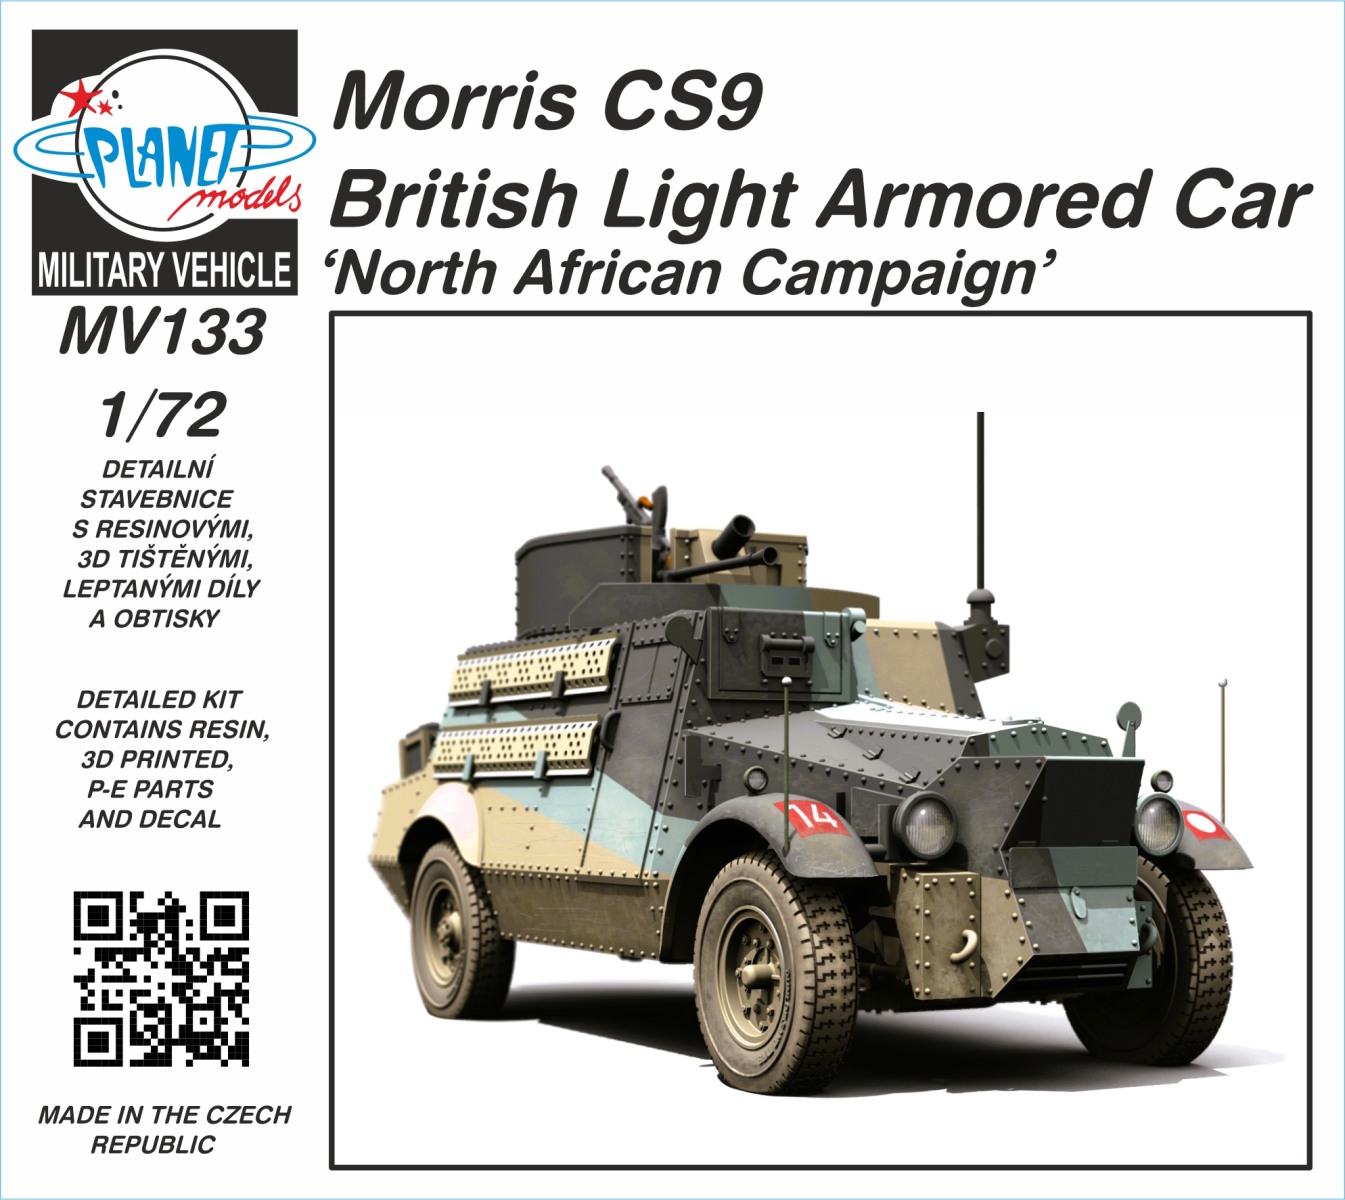 1/72 Morris CS9 British Light Armored Car ‘North African Campaign’